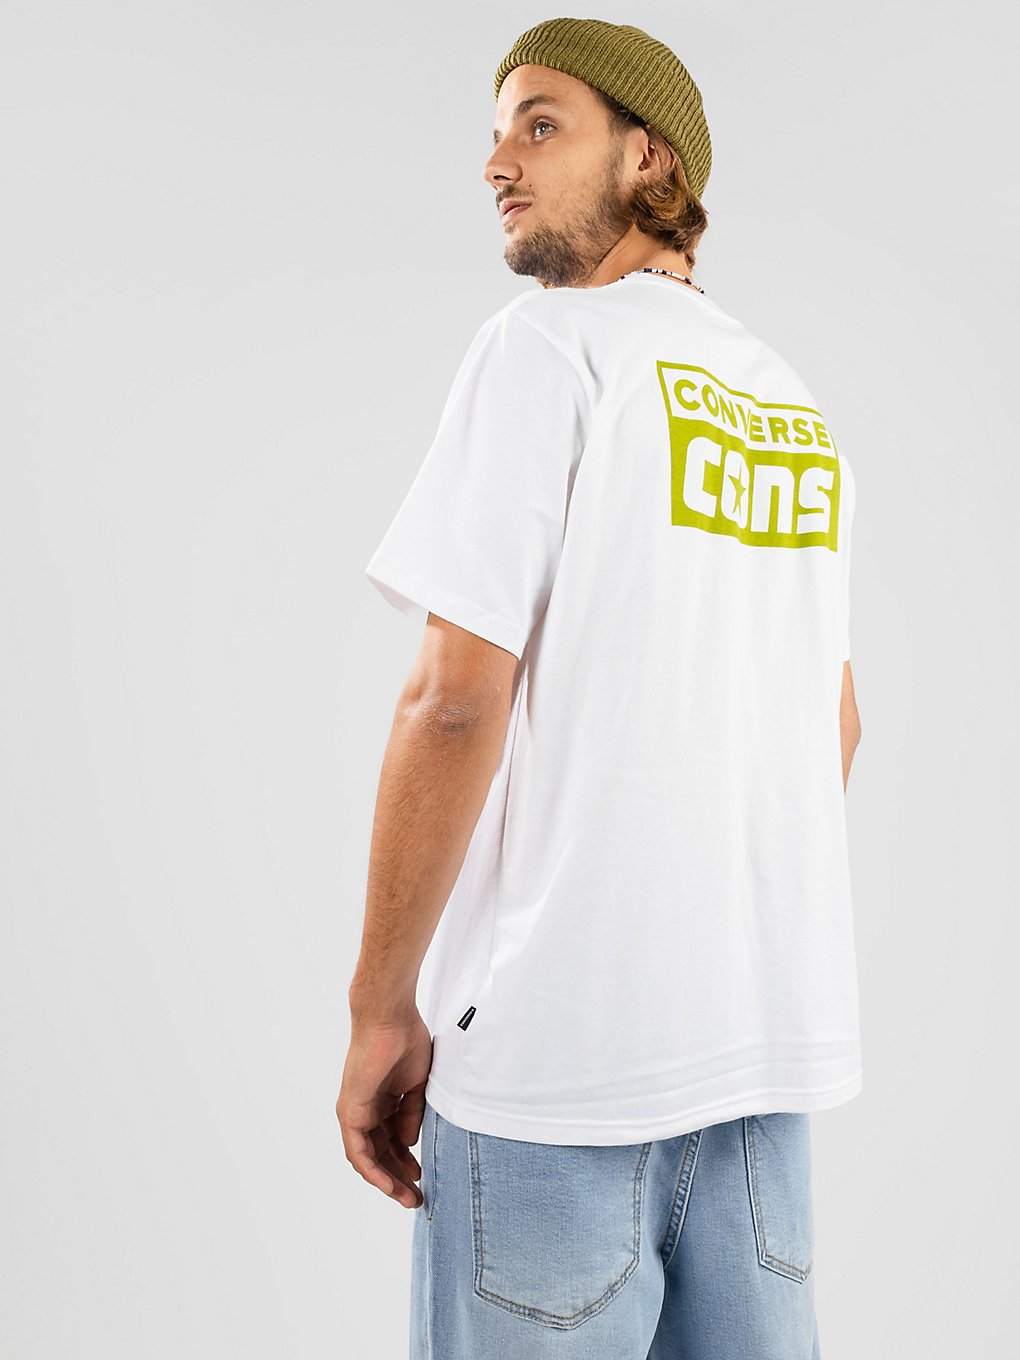 Converse Cons T-Shirt white kaufen